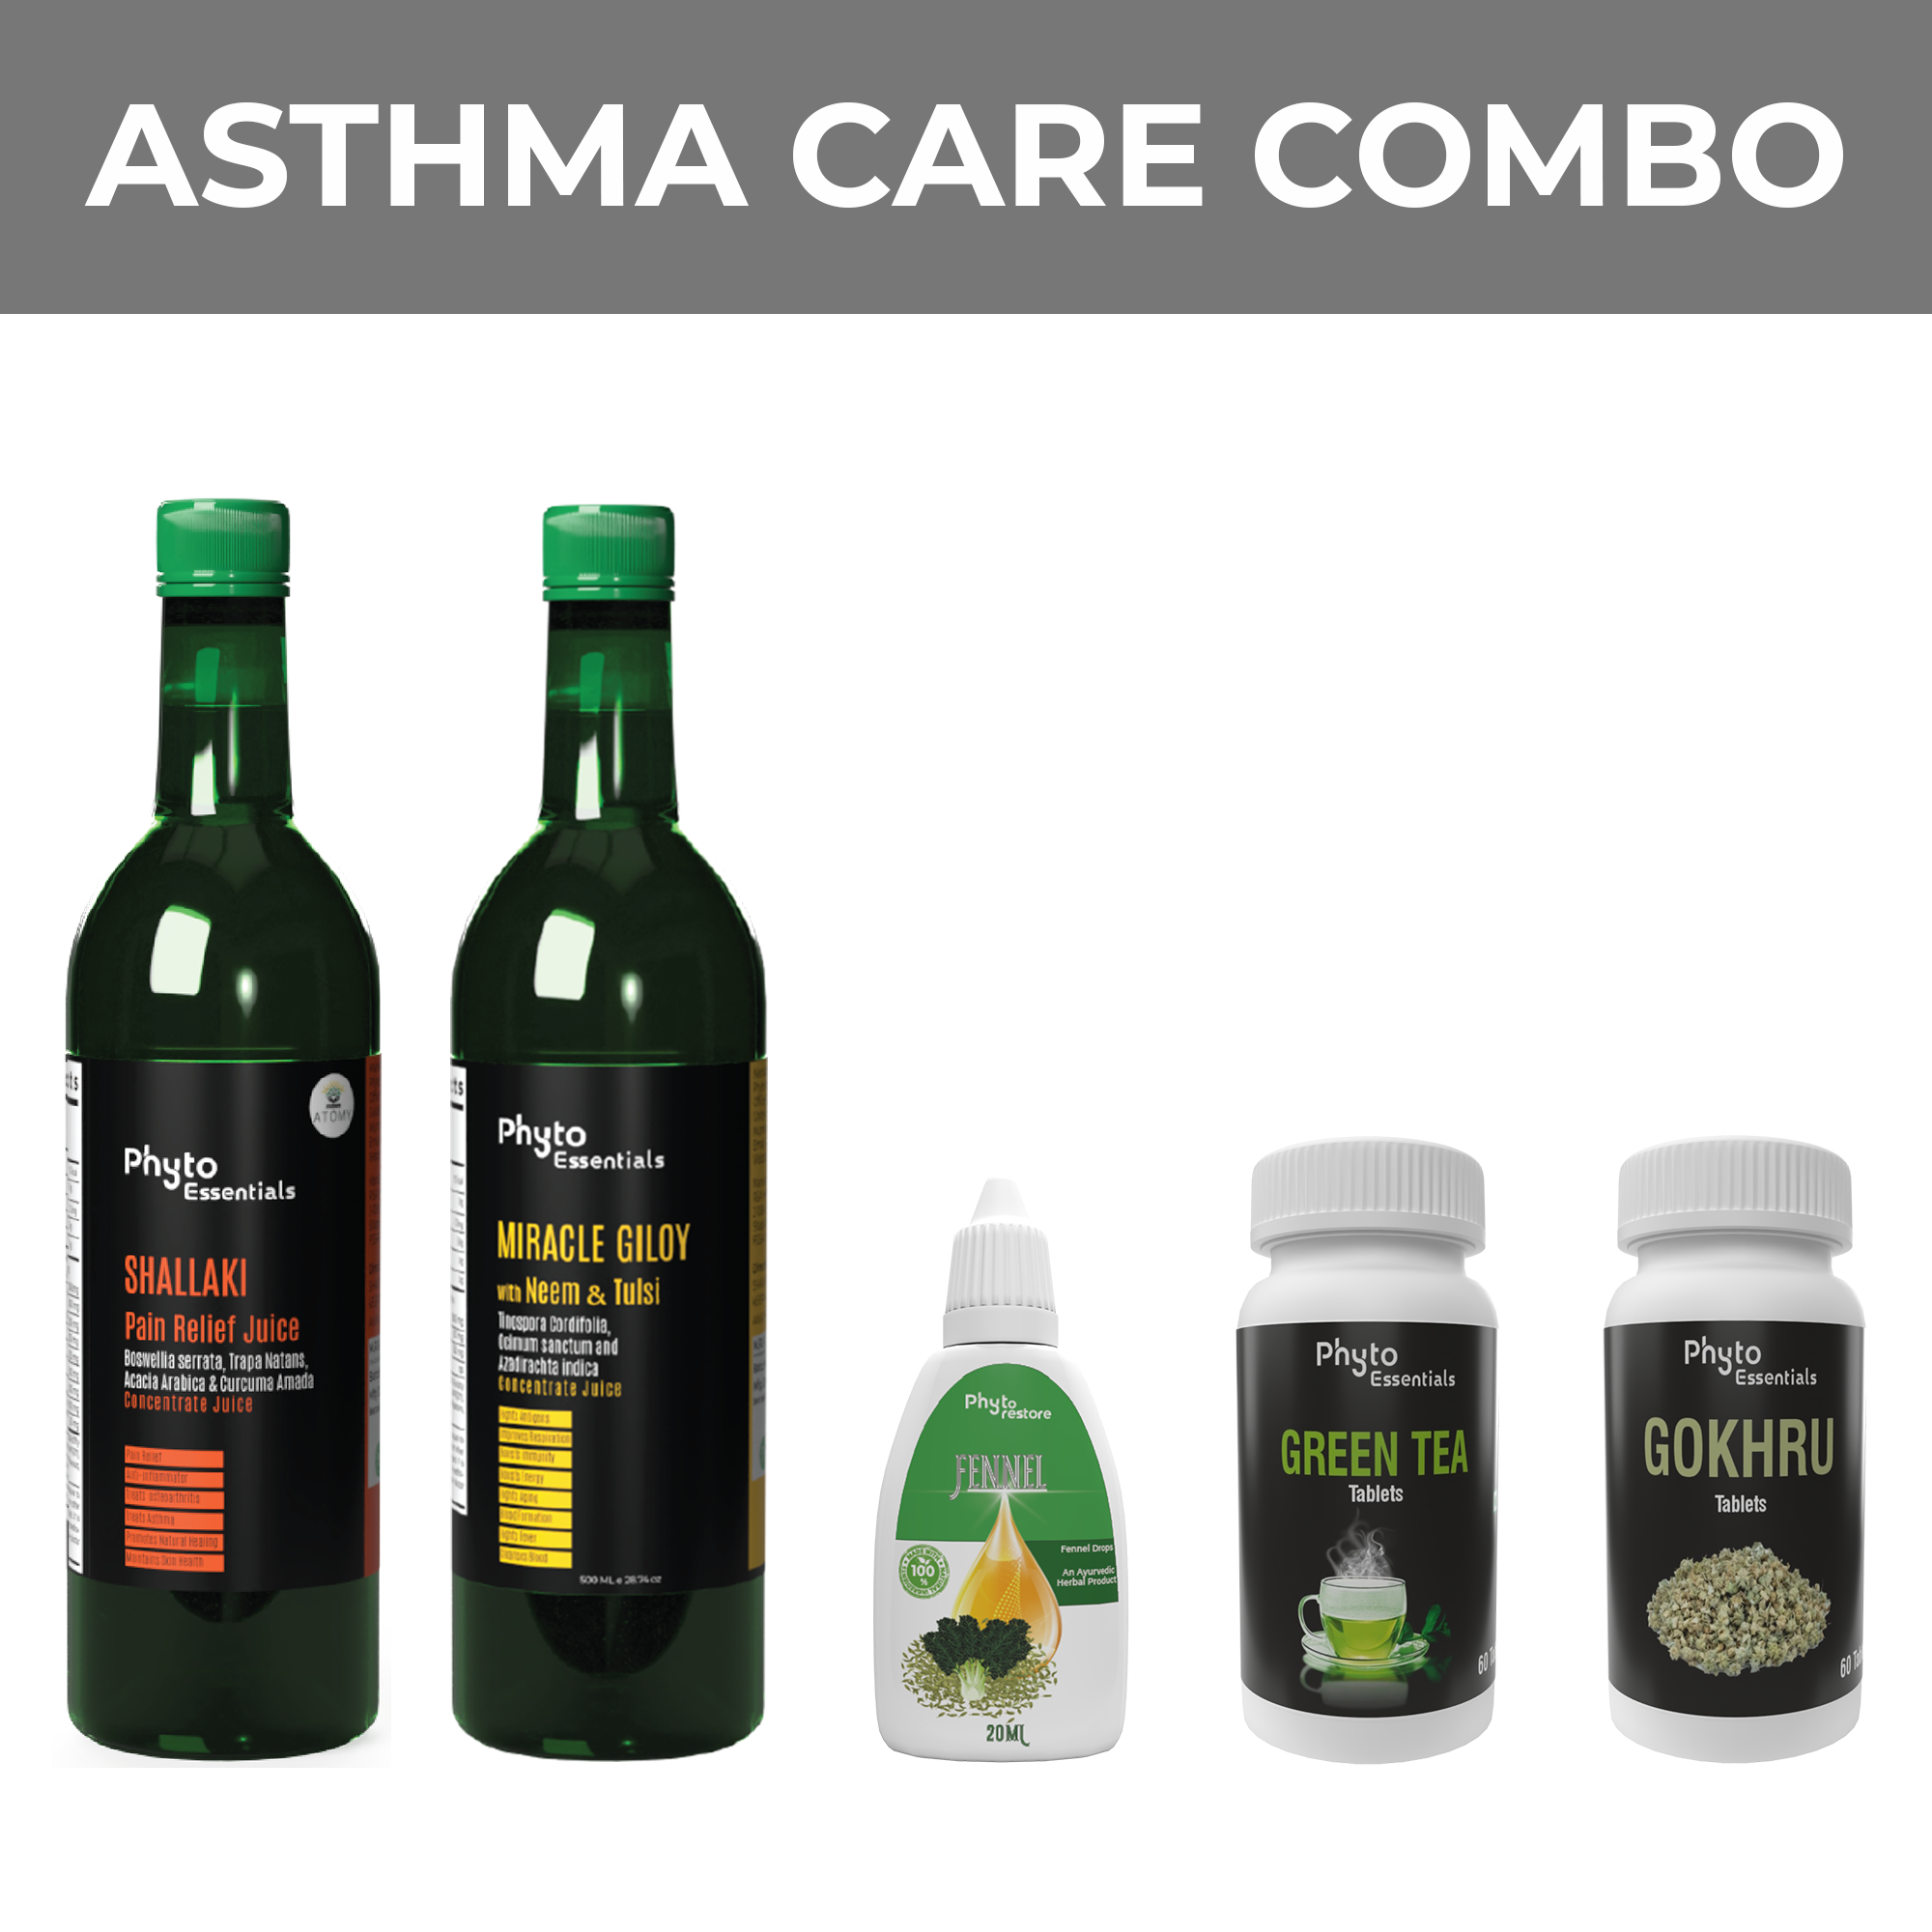 Asthma Care Combo